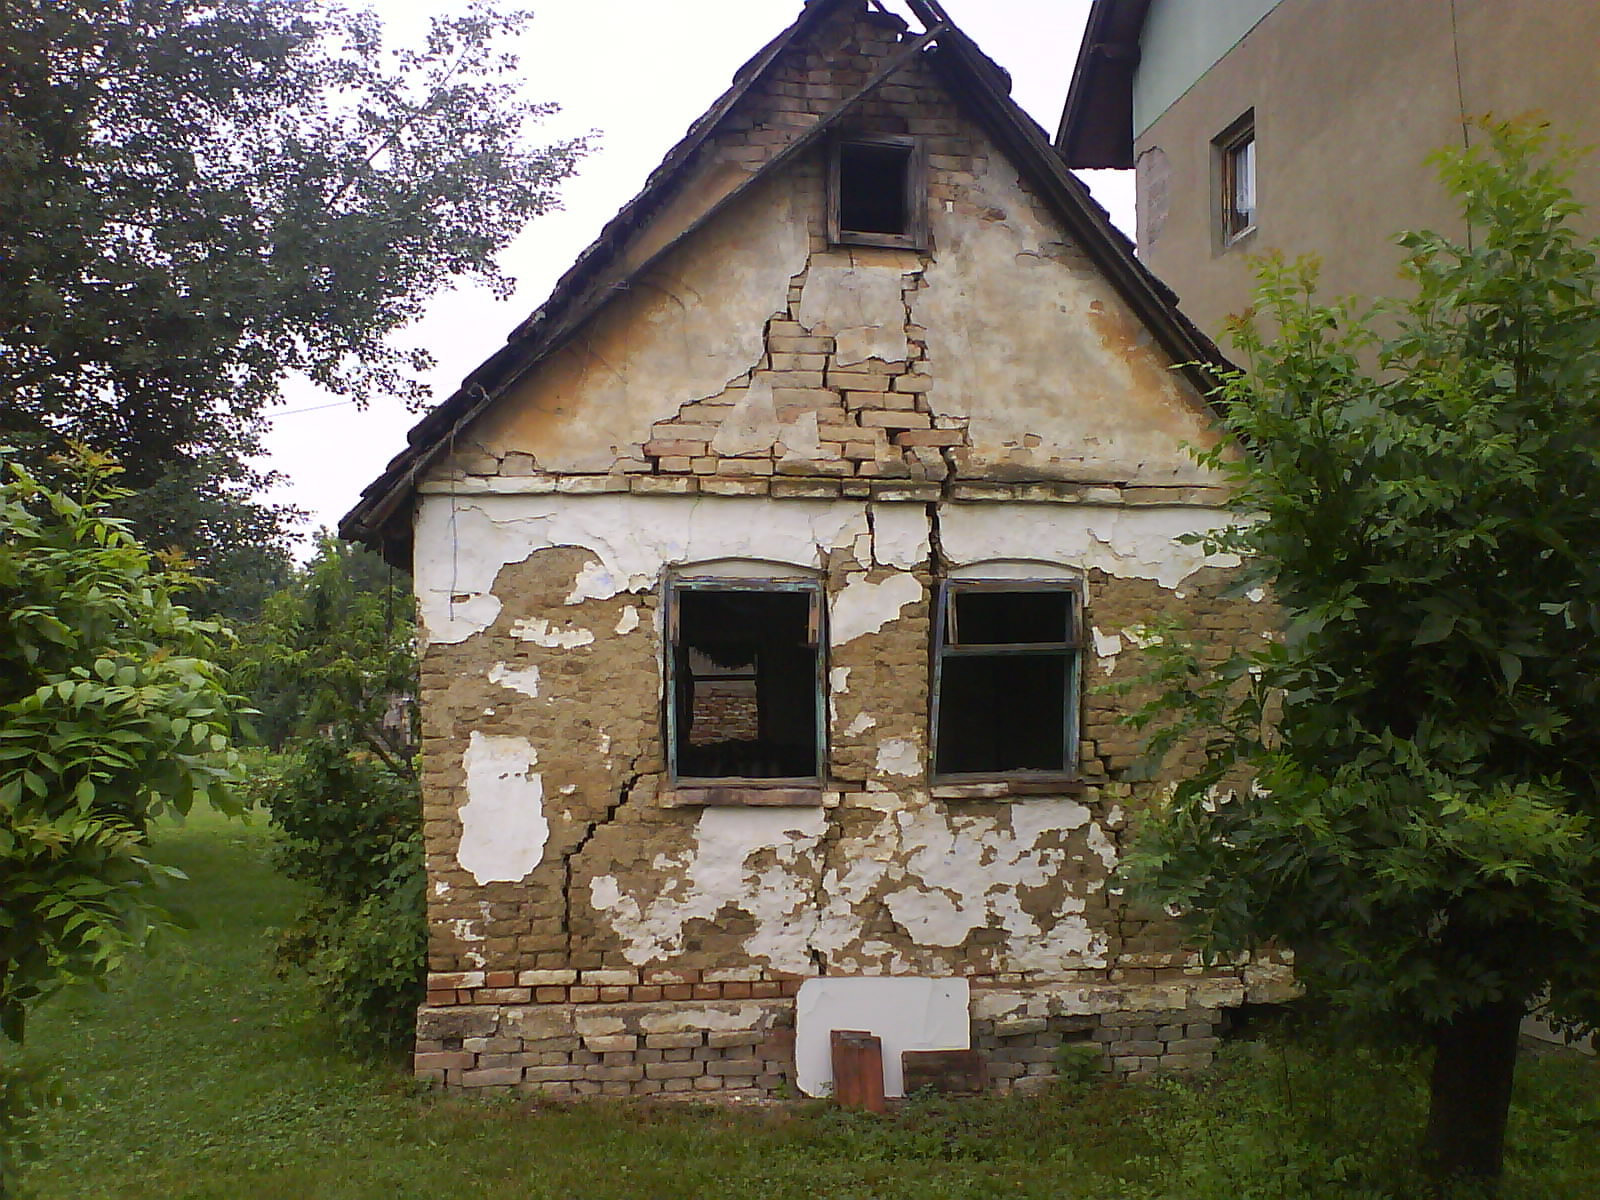 Small damaged House. by JulieLovesMusic on DeviantArt